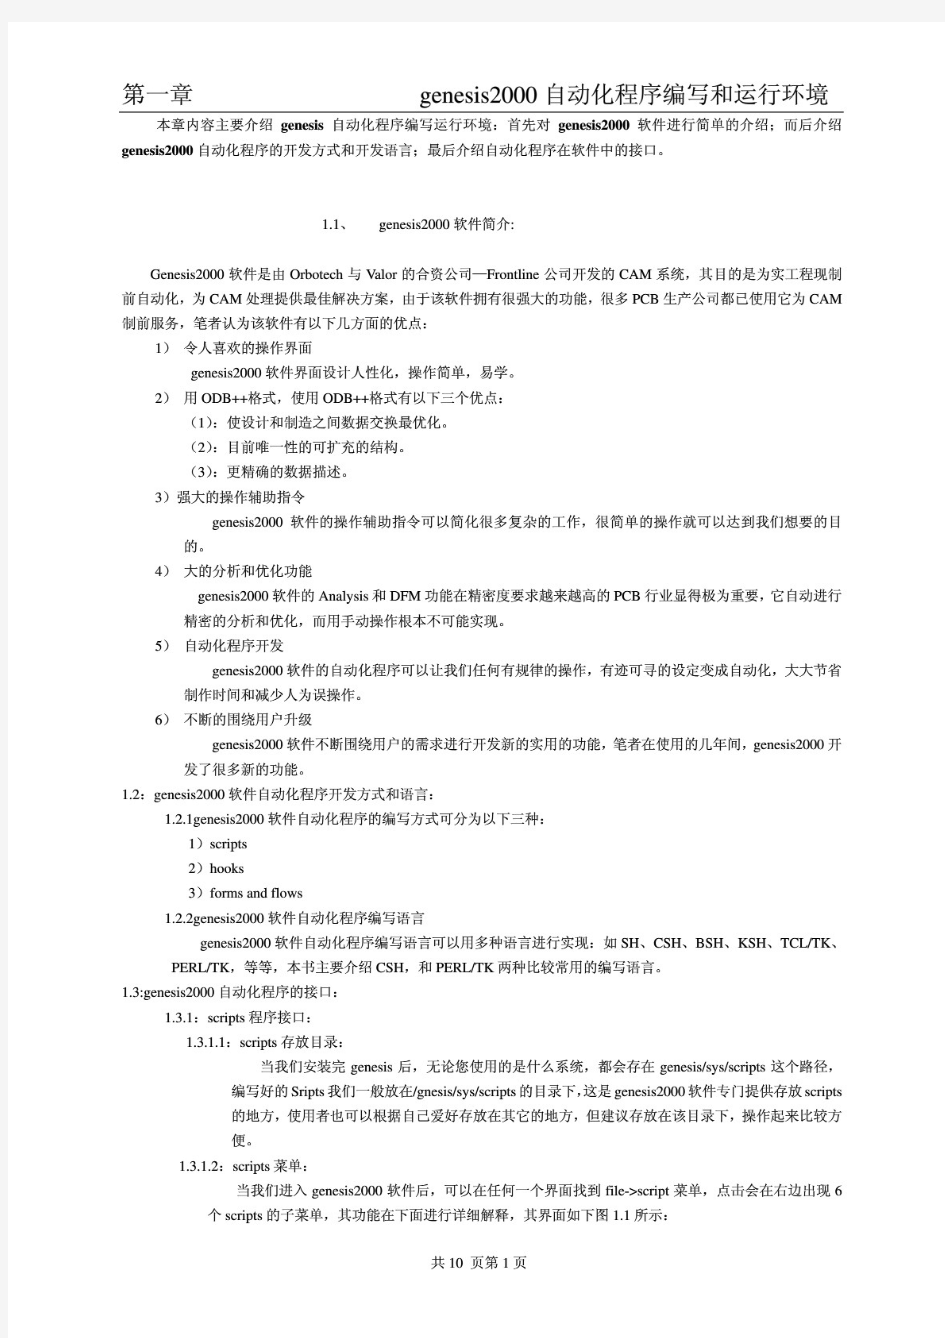 genesis2000中文编程教材(第一张)